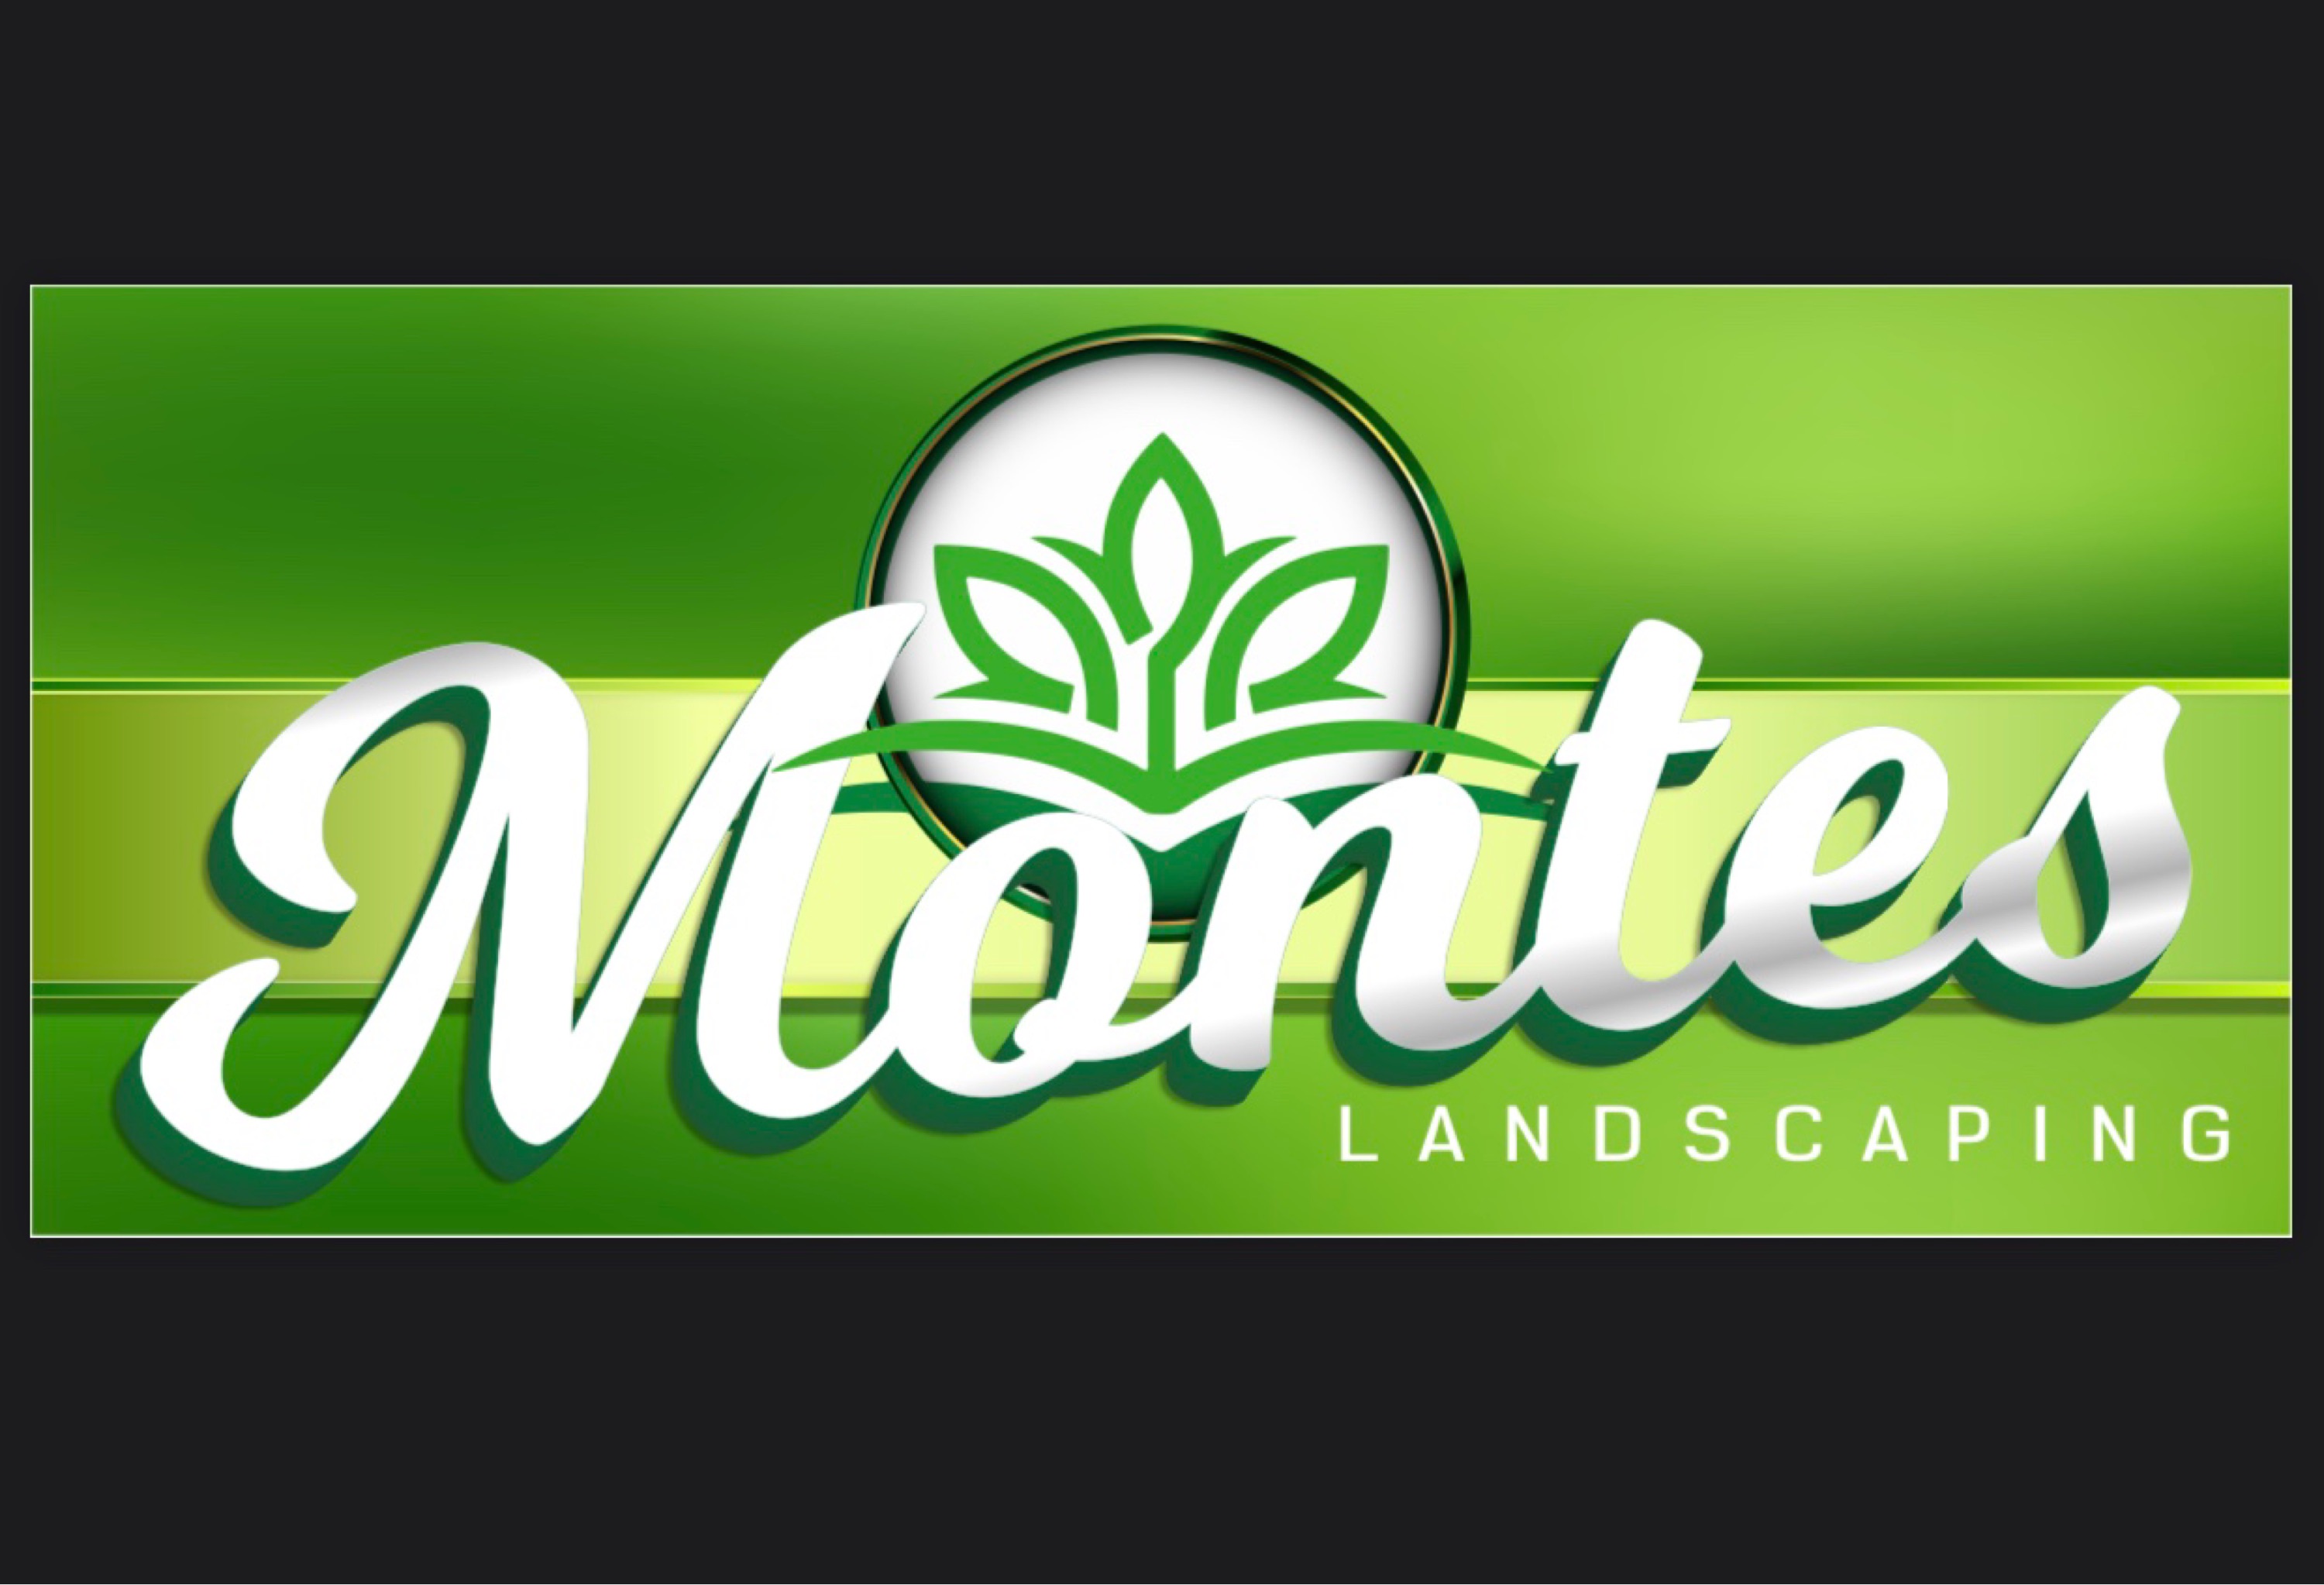 Montes Landscaping Logo